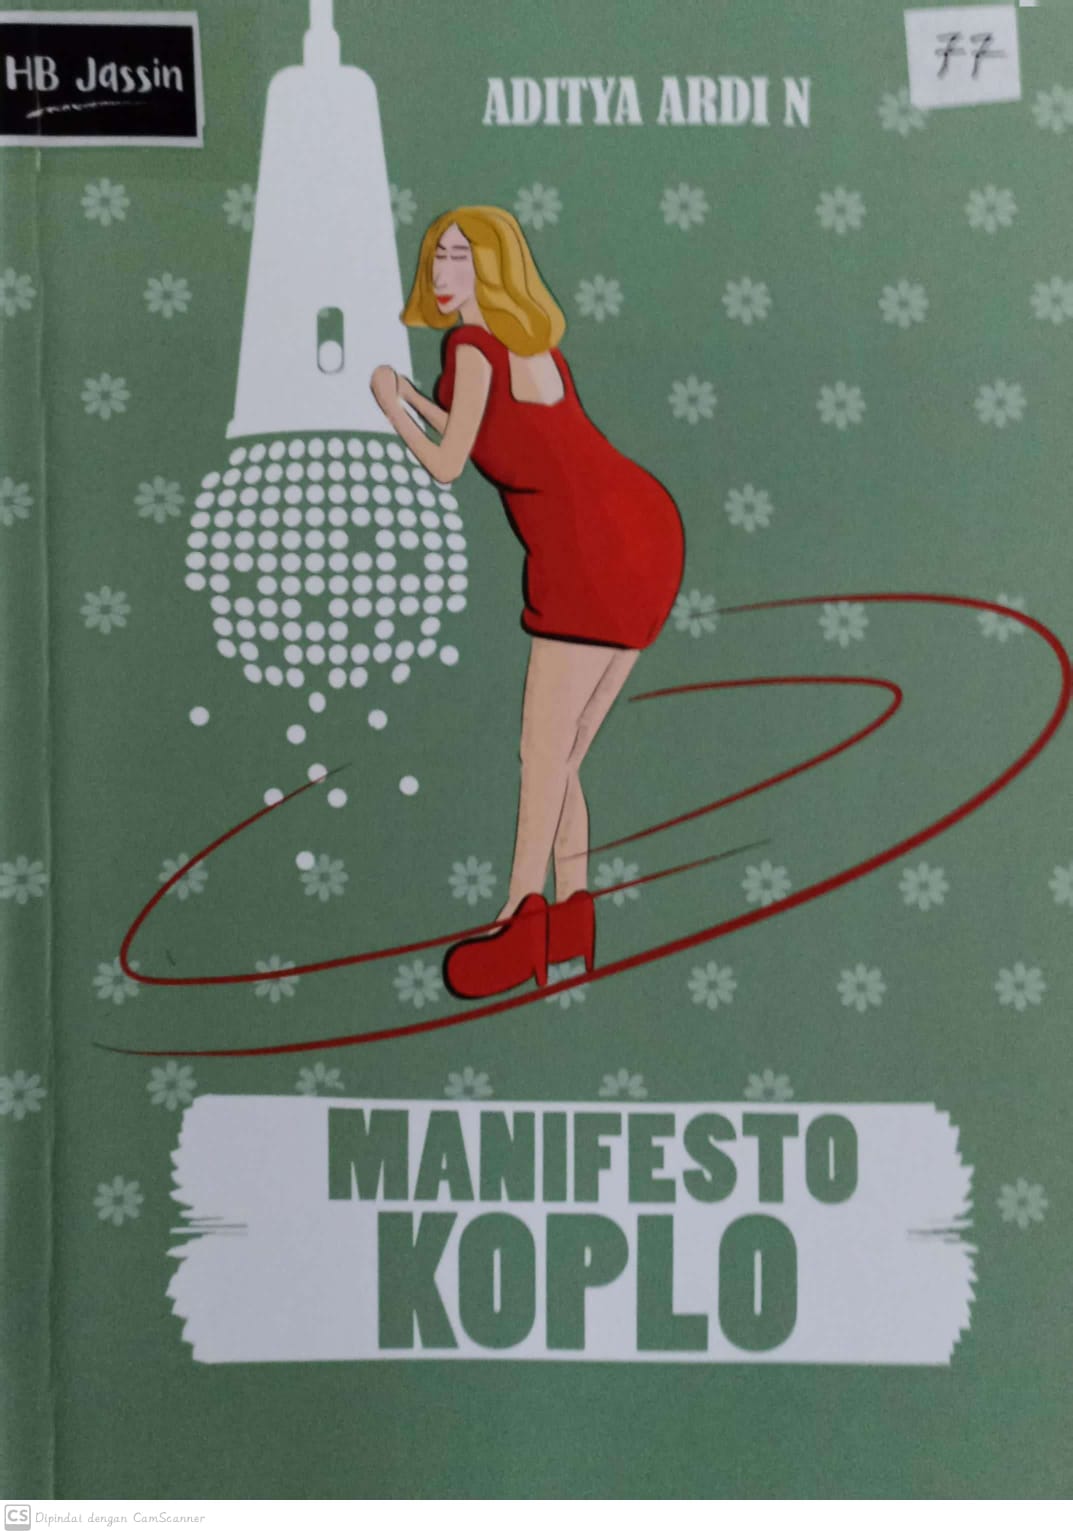 Manifesto koplo